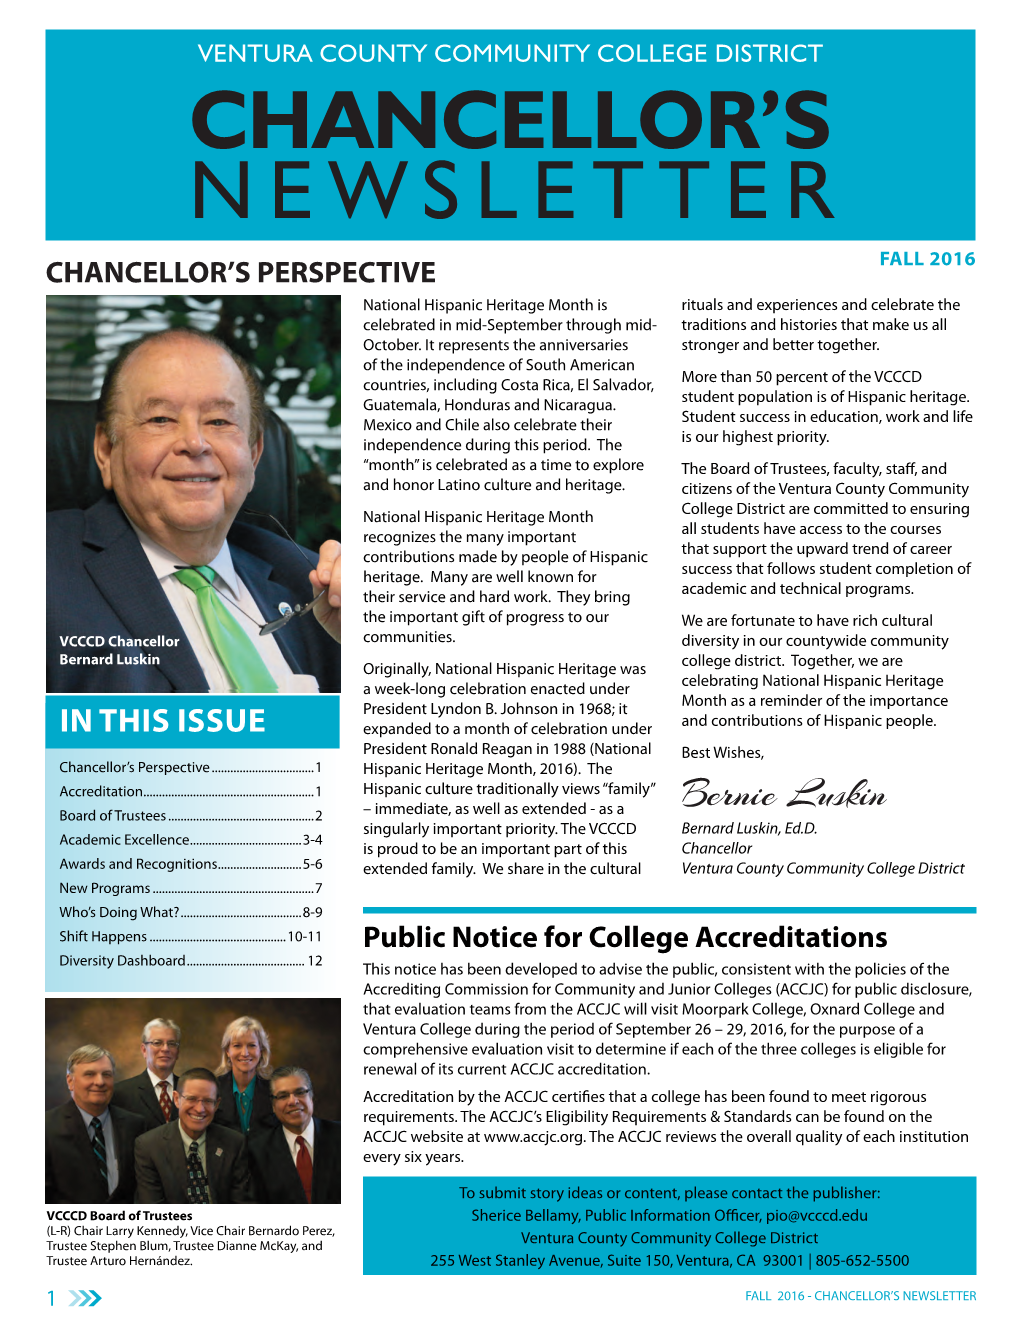 Chancellor's Newsletter